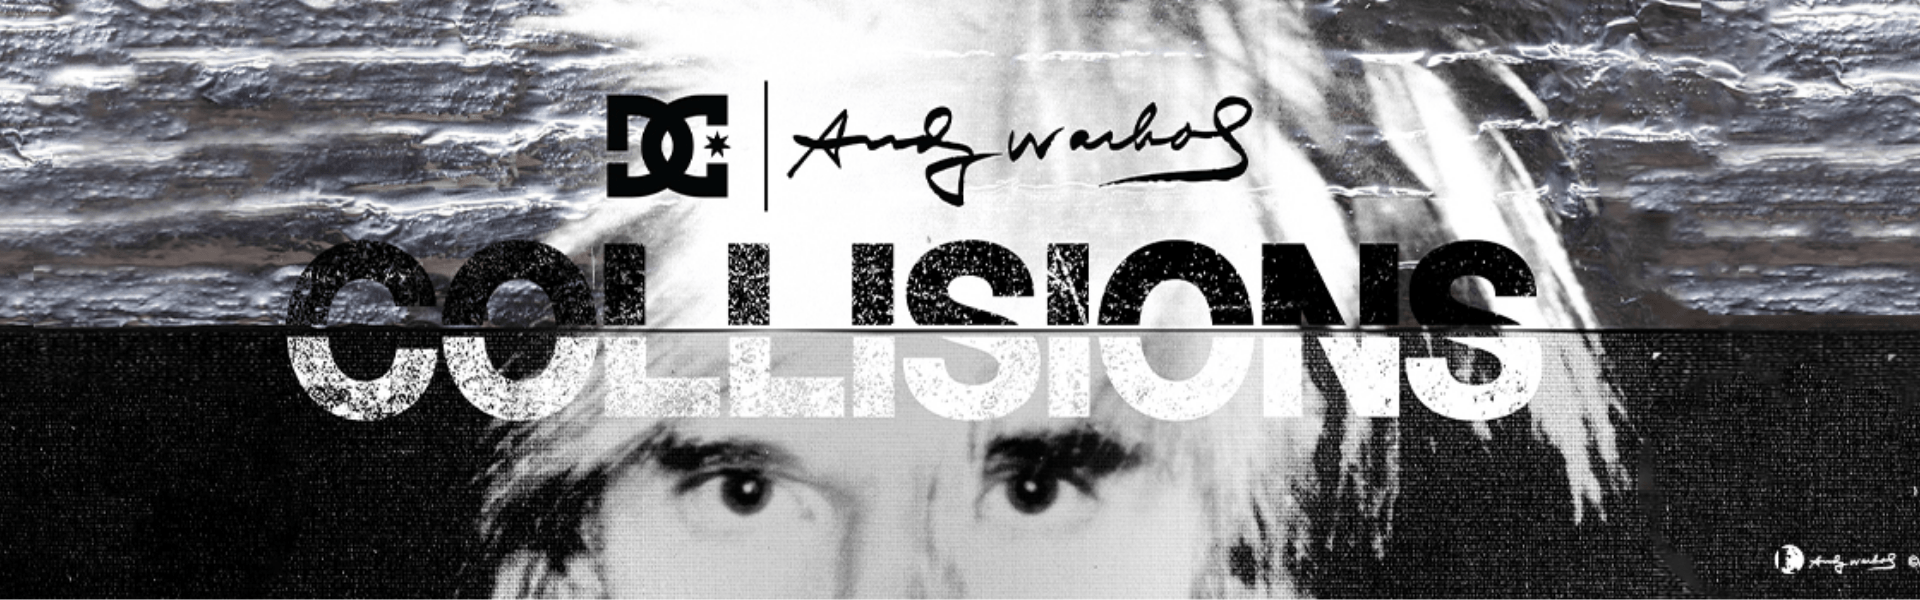 DC x Andy Warhol